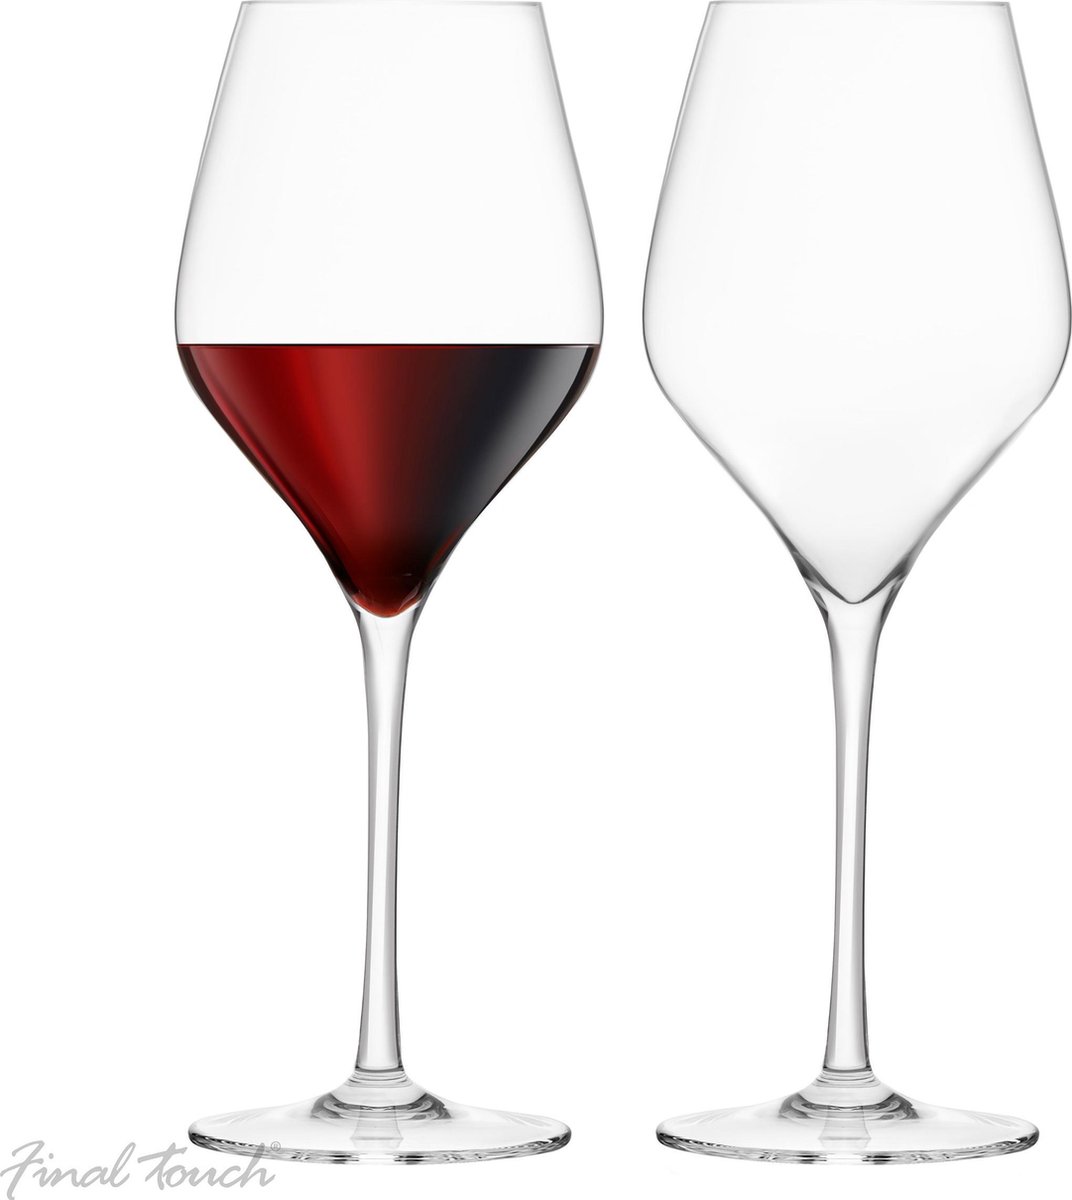 Final Touch - glazen met rode wijn, loodvrij DuraSHIELD Titanium-kristal - Set van 2